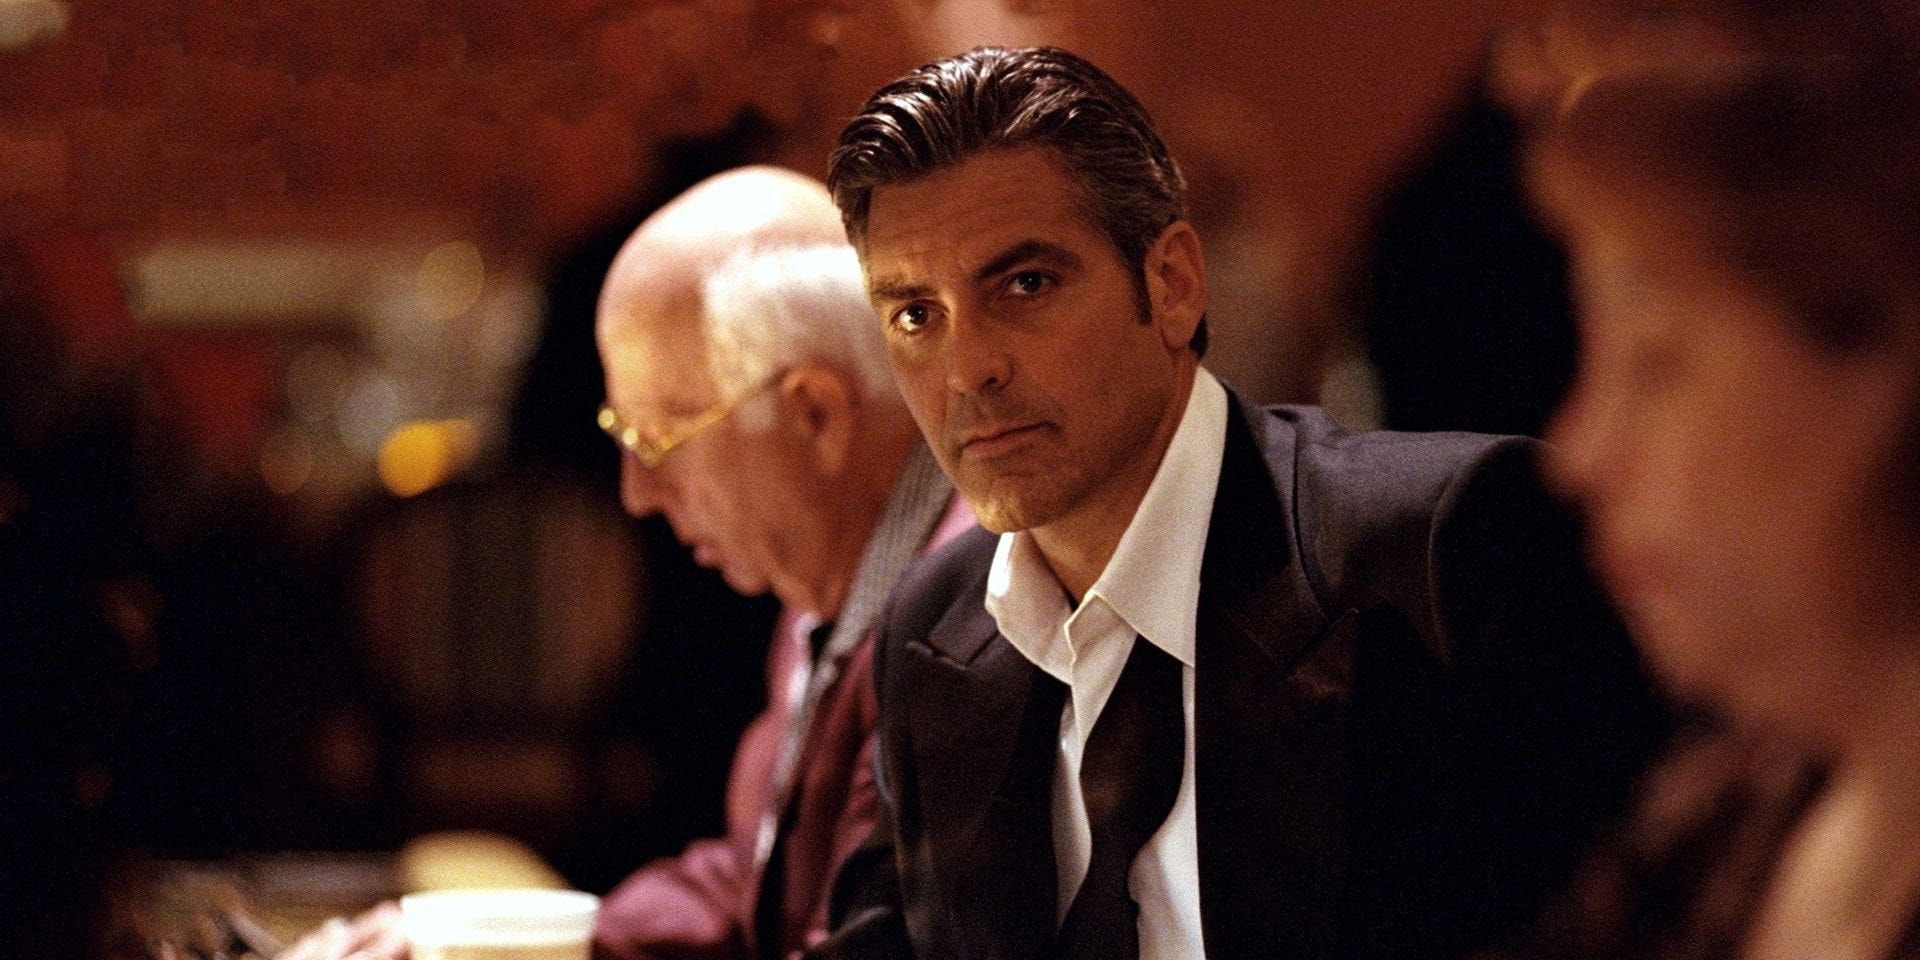 George Clooney wearing a tux as Danny Ocean in Ocean's Eleven.